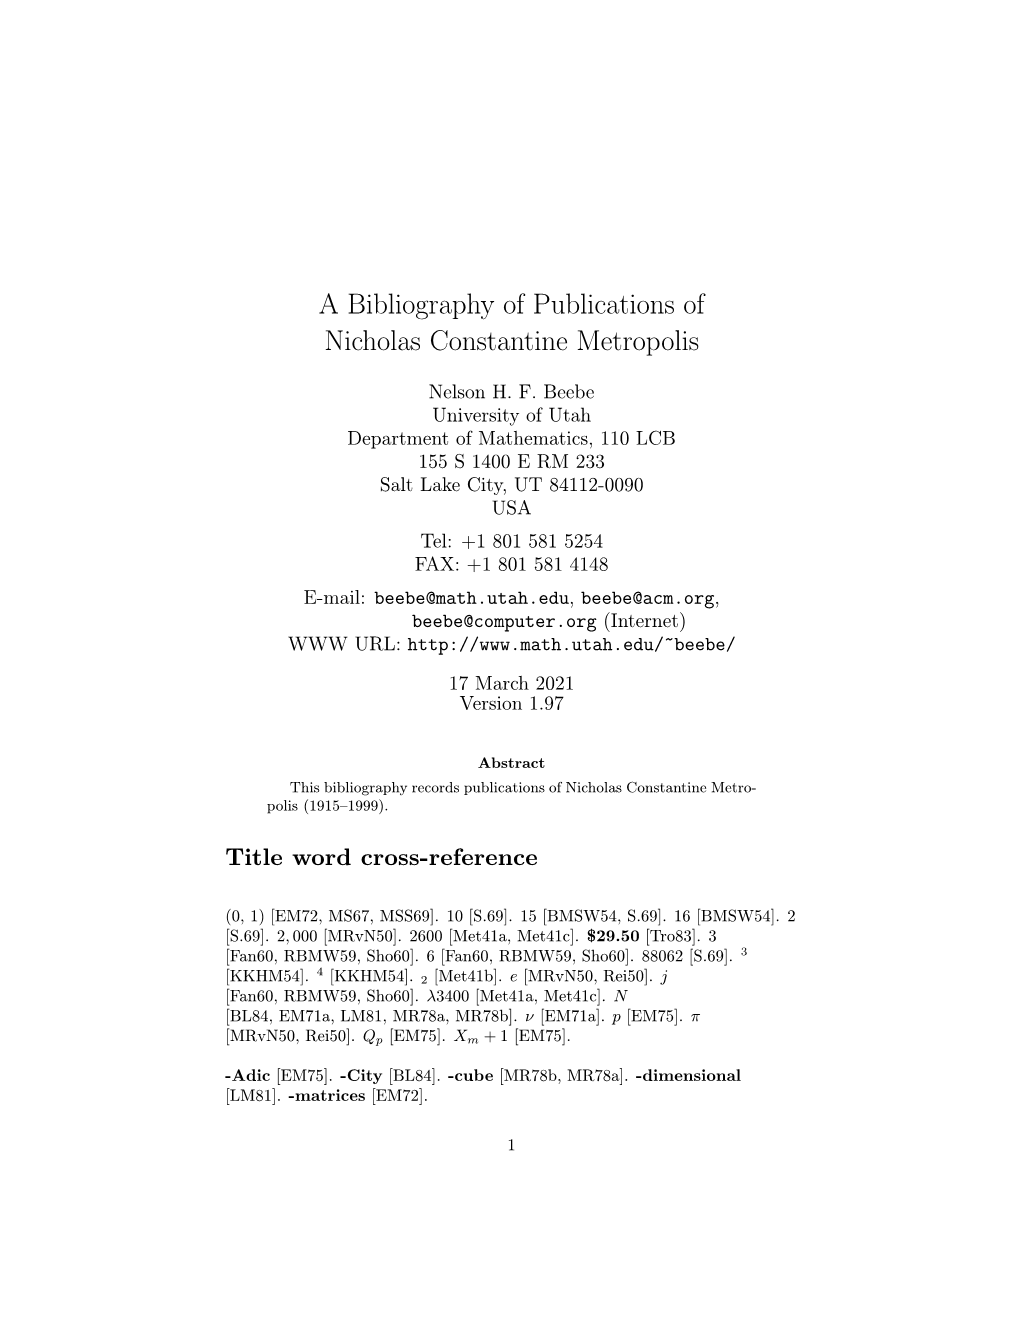 A Bibliography of Publications of Nicholas Constantine Metropolis